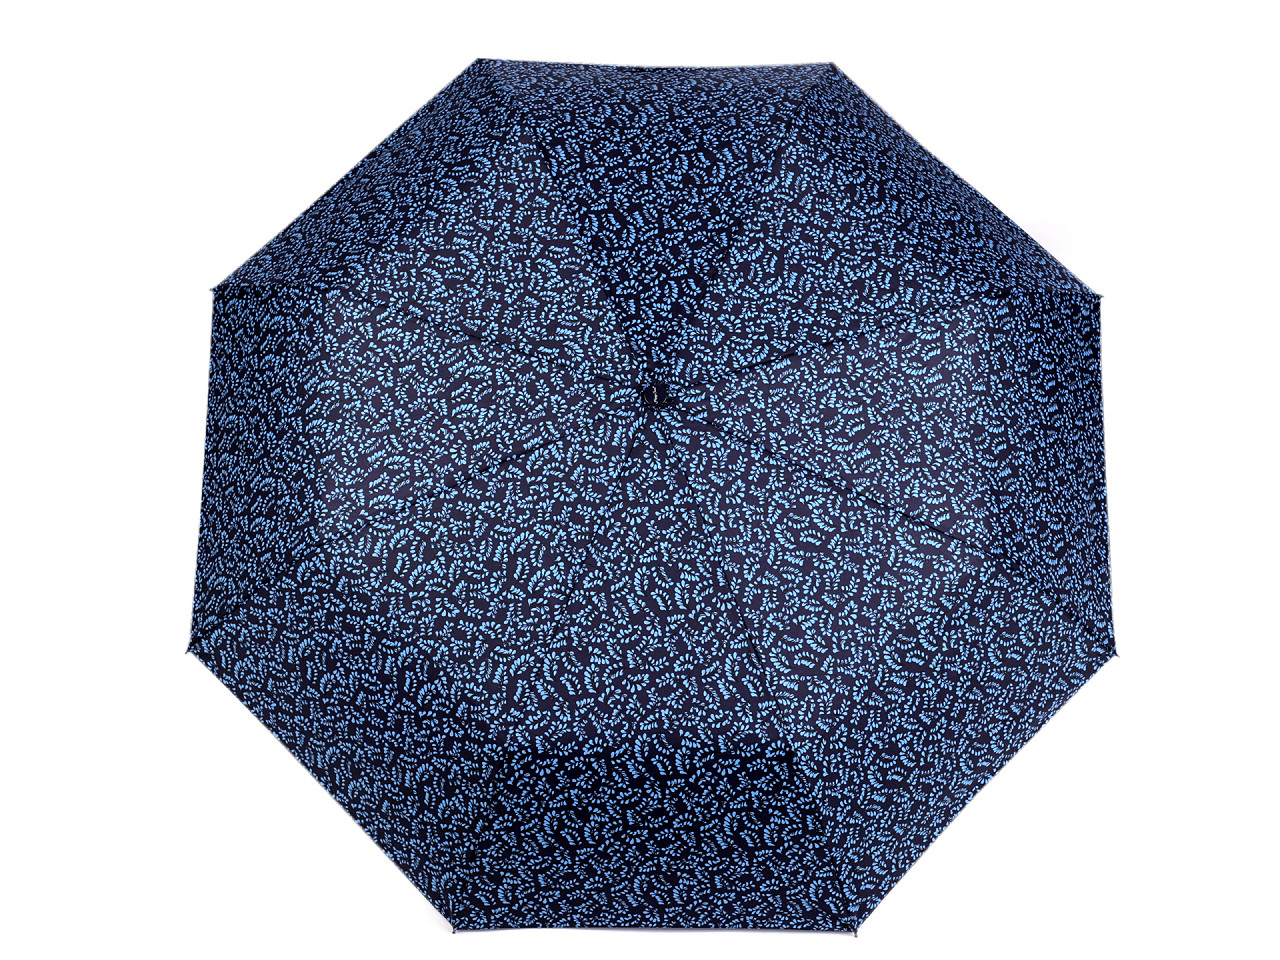 Damen-Faltregenschirm, dunkelblau, 1 Stk.